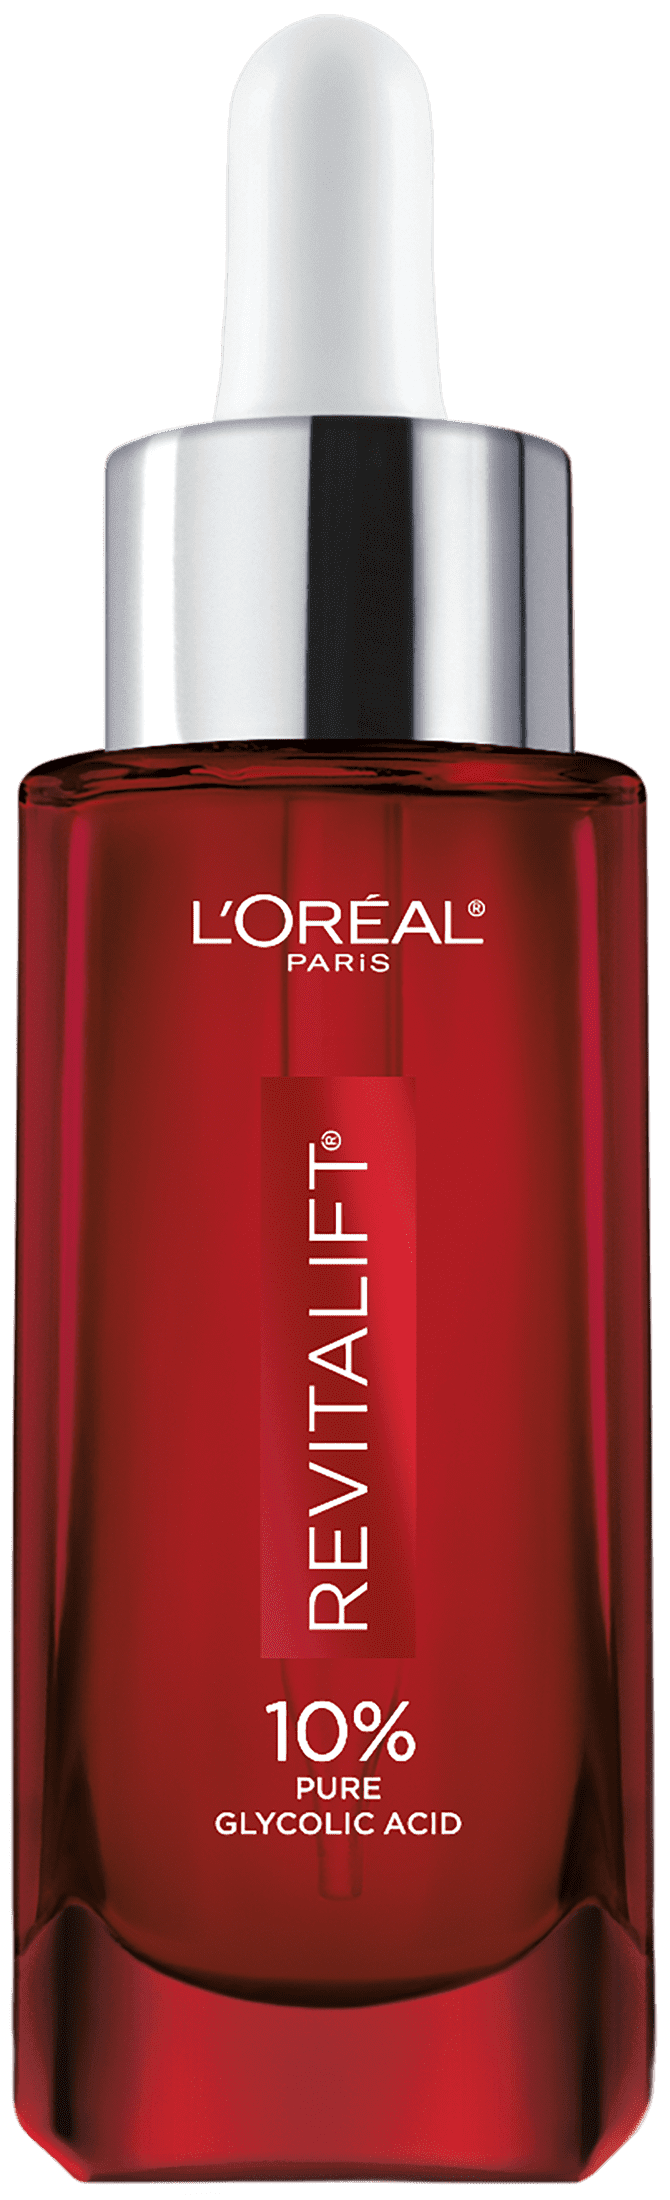 L'Oreal Paris Age Perfect Midnight Serum Trial Size, 1.7 oz